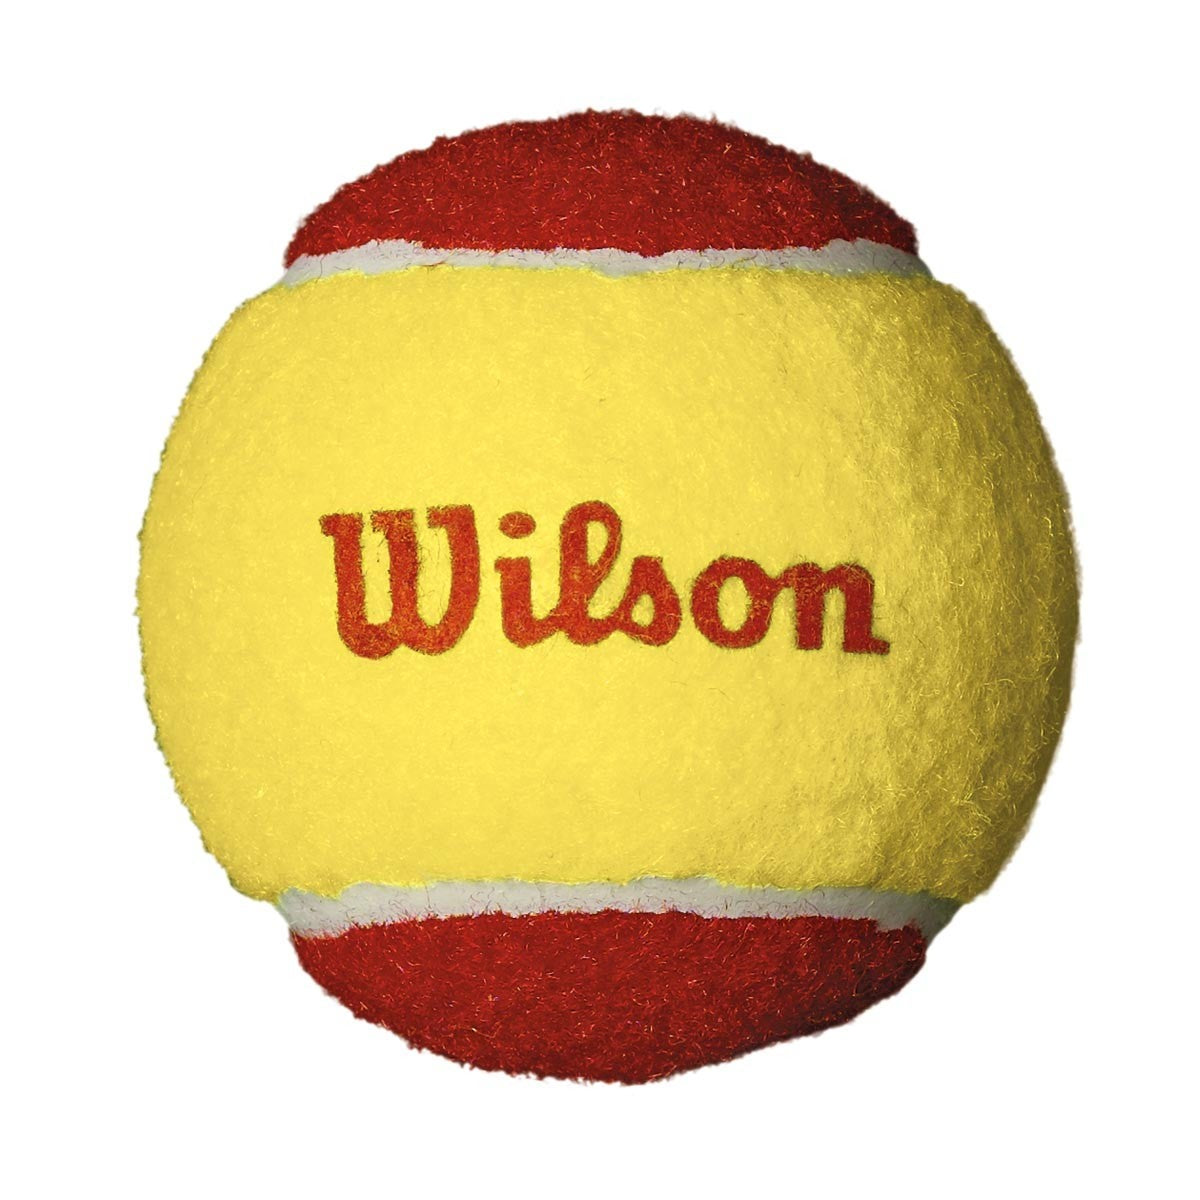 Wilson Starter Red Tennis Ball Pack